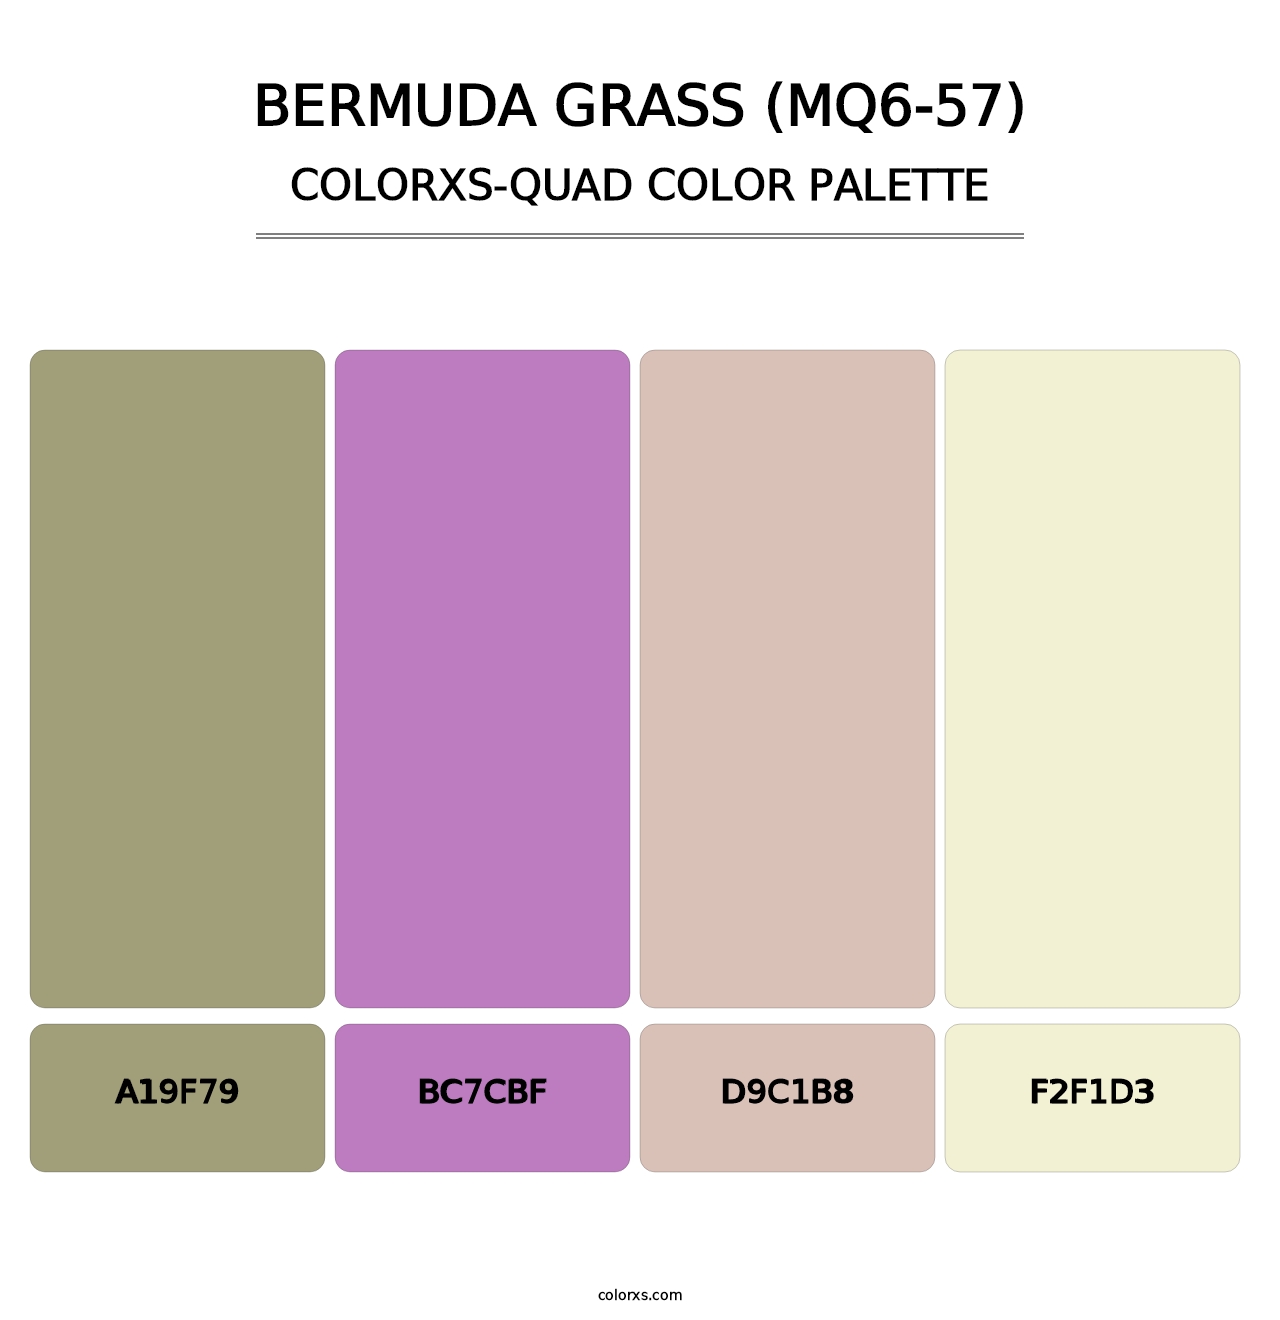 Bermuda Grass (MQ6-57) - Colorxs Quad Palette